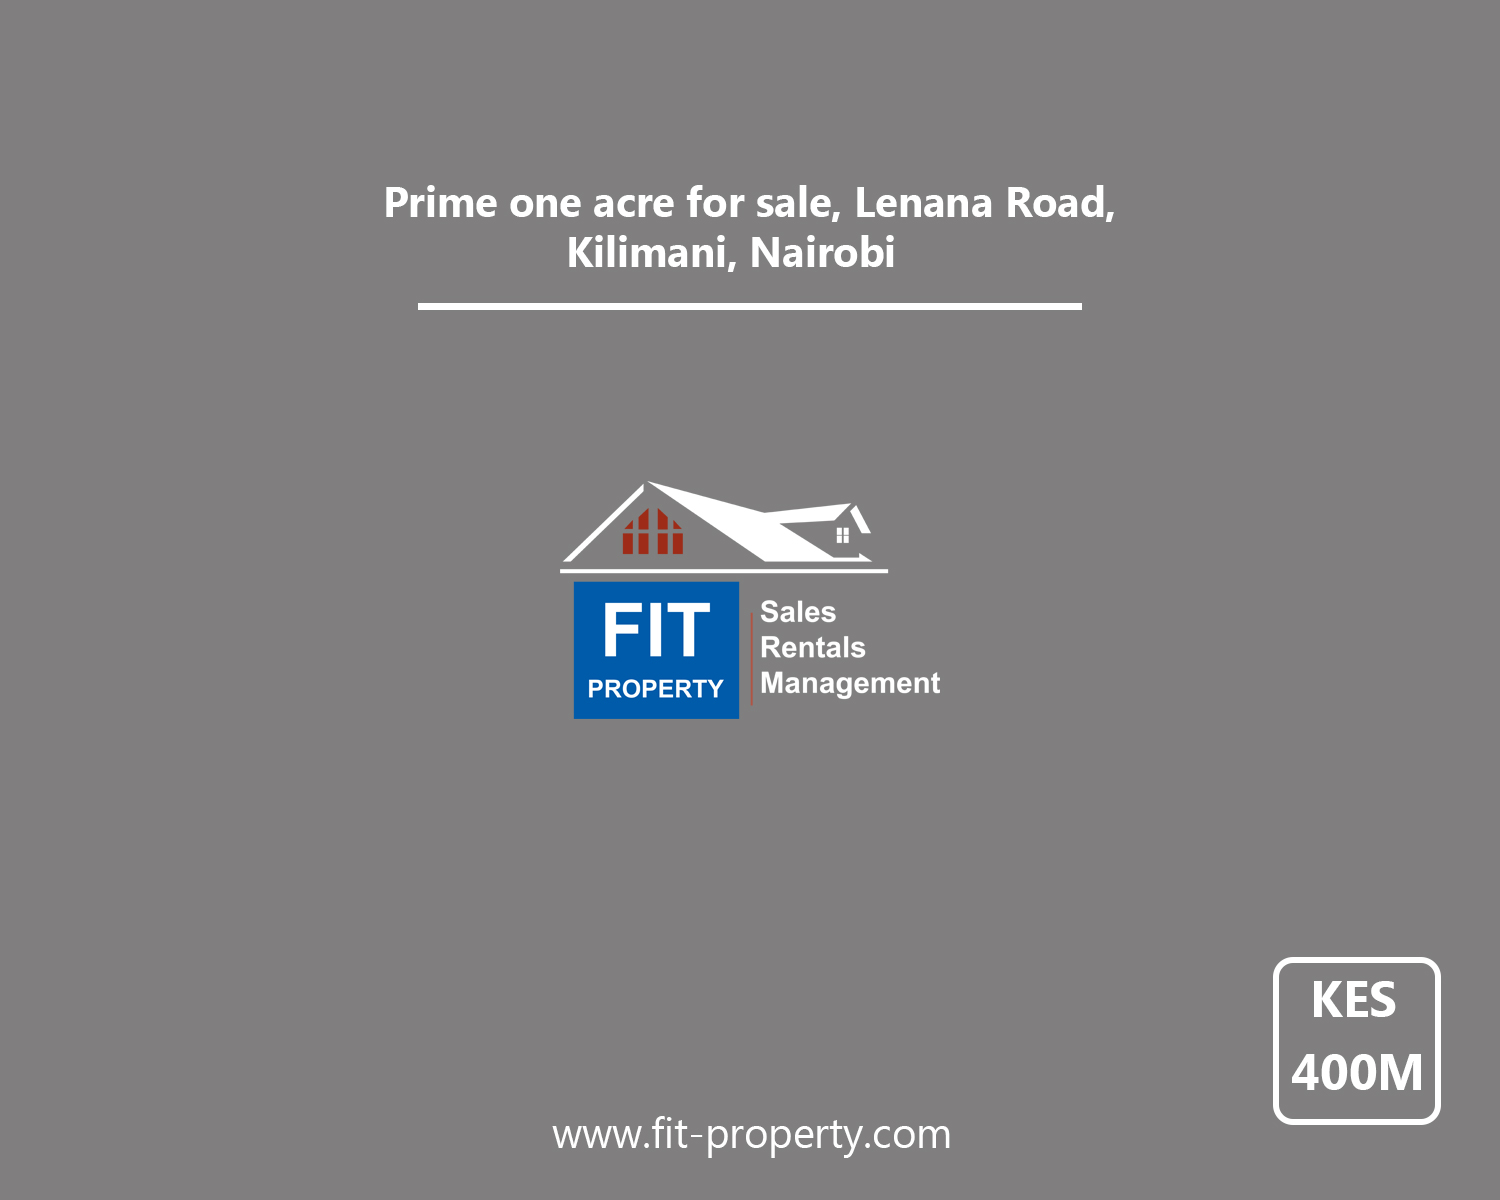 Prime 1 acre for sale, Lenana Road, Kilimani, Nairobi. Price: KES 375M. FIT PROPERTY